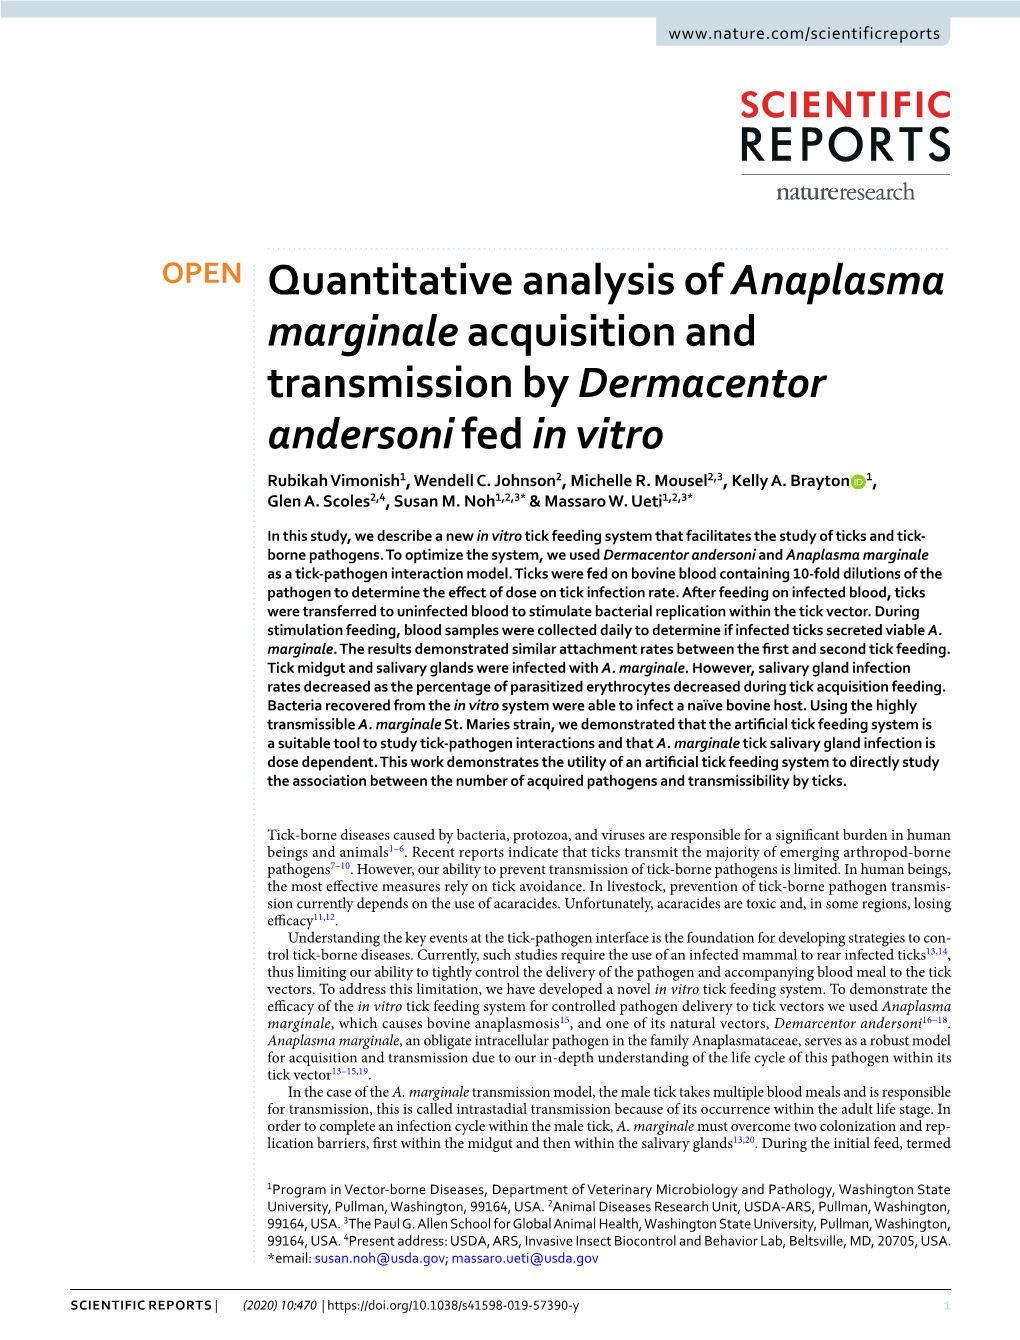 Quantitative Analysis of Anaplasma Marginale Acquisition and Transmission by Dermacentor Andersoni Fed in Vitro Rubikah Vimonish1, Wendell C